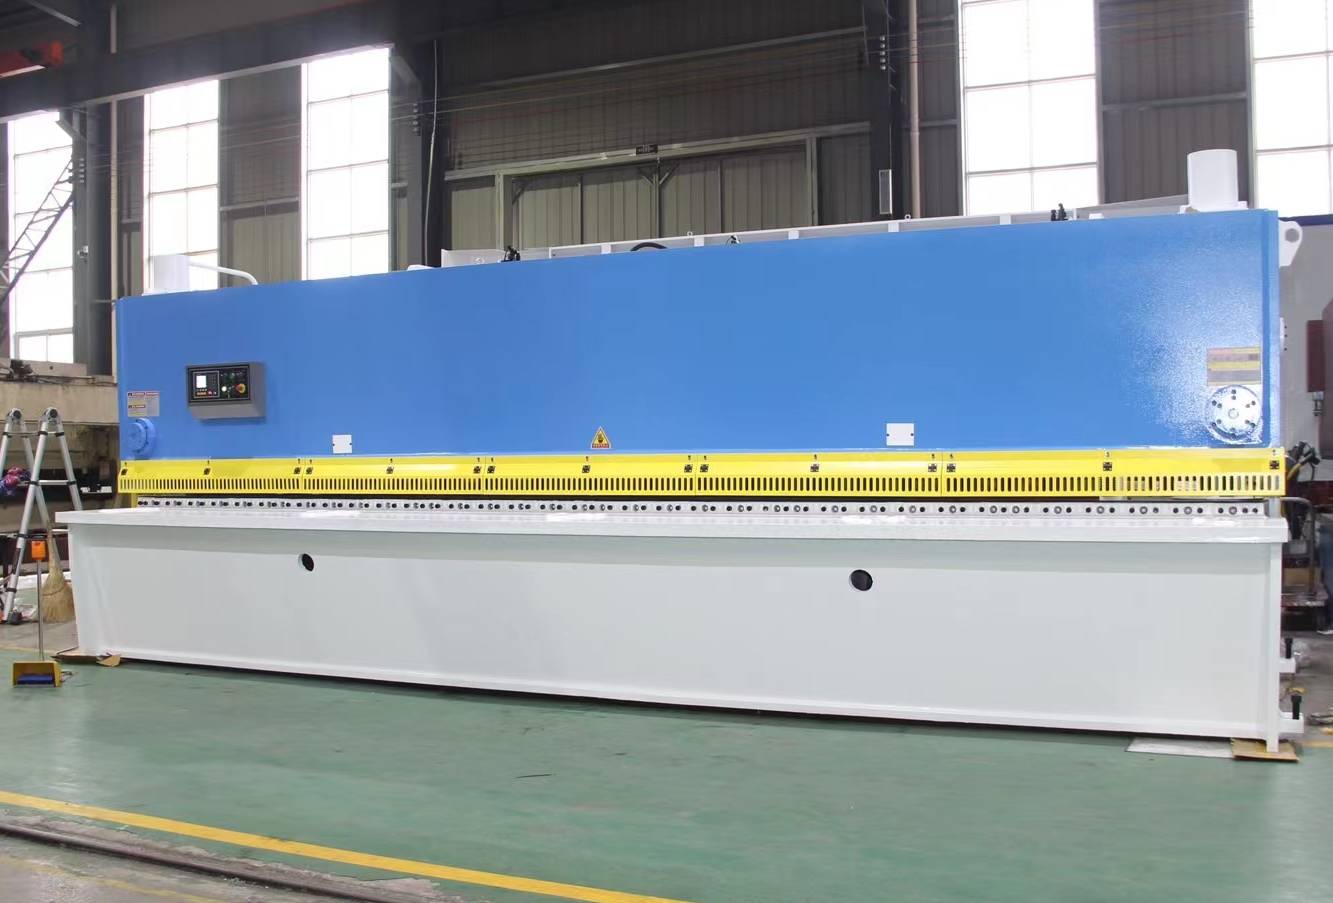 6x6000 hydraulic guillotine shearing machine ship to Applied Machinery Australia